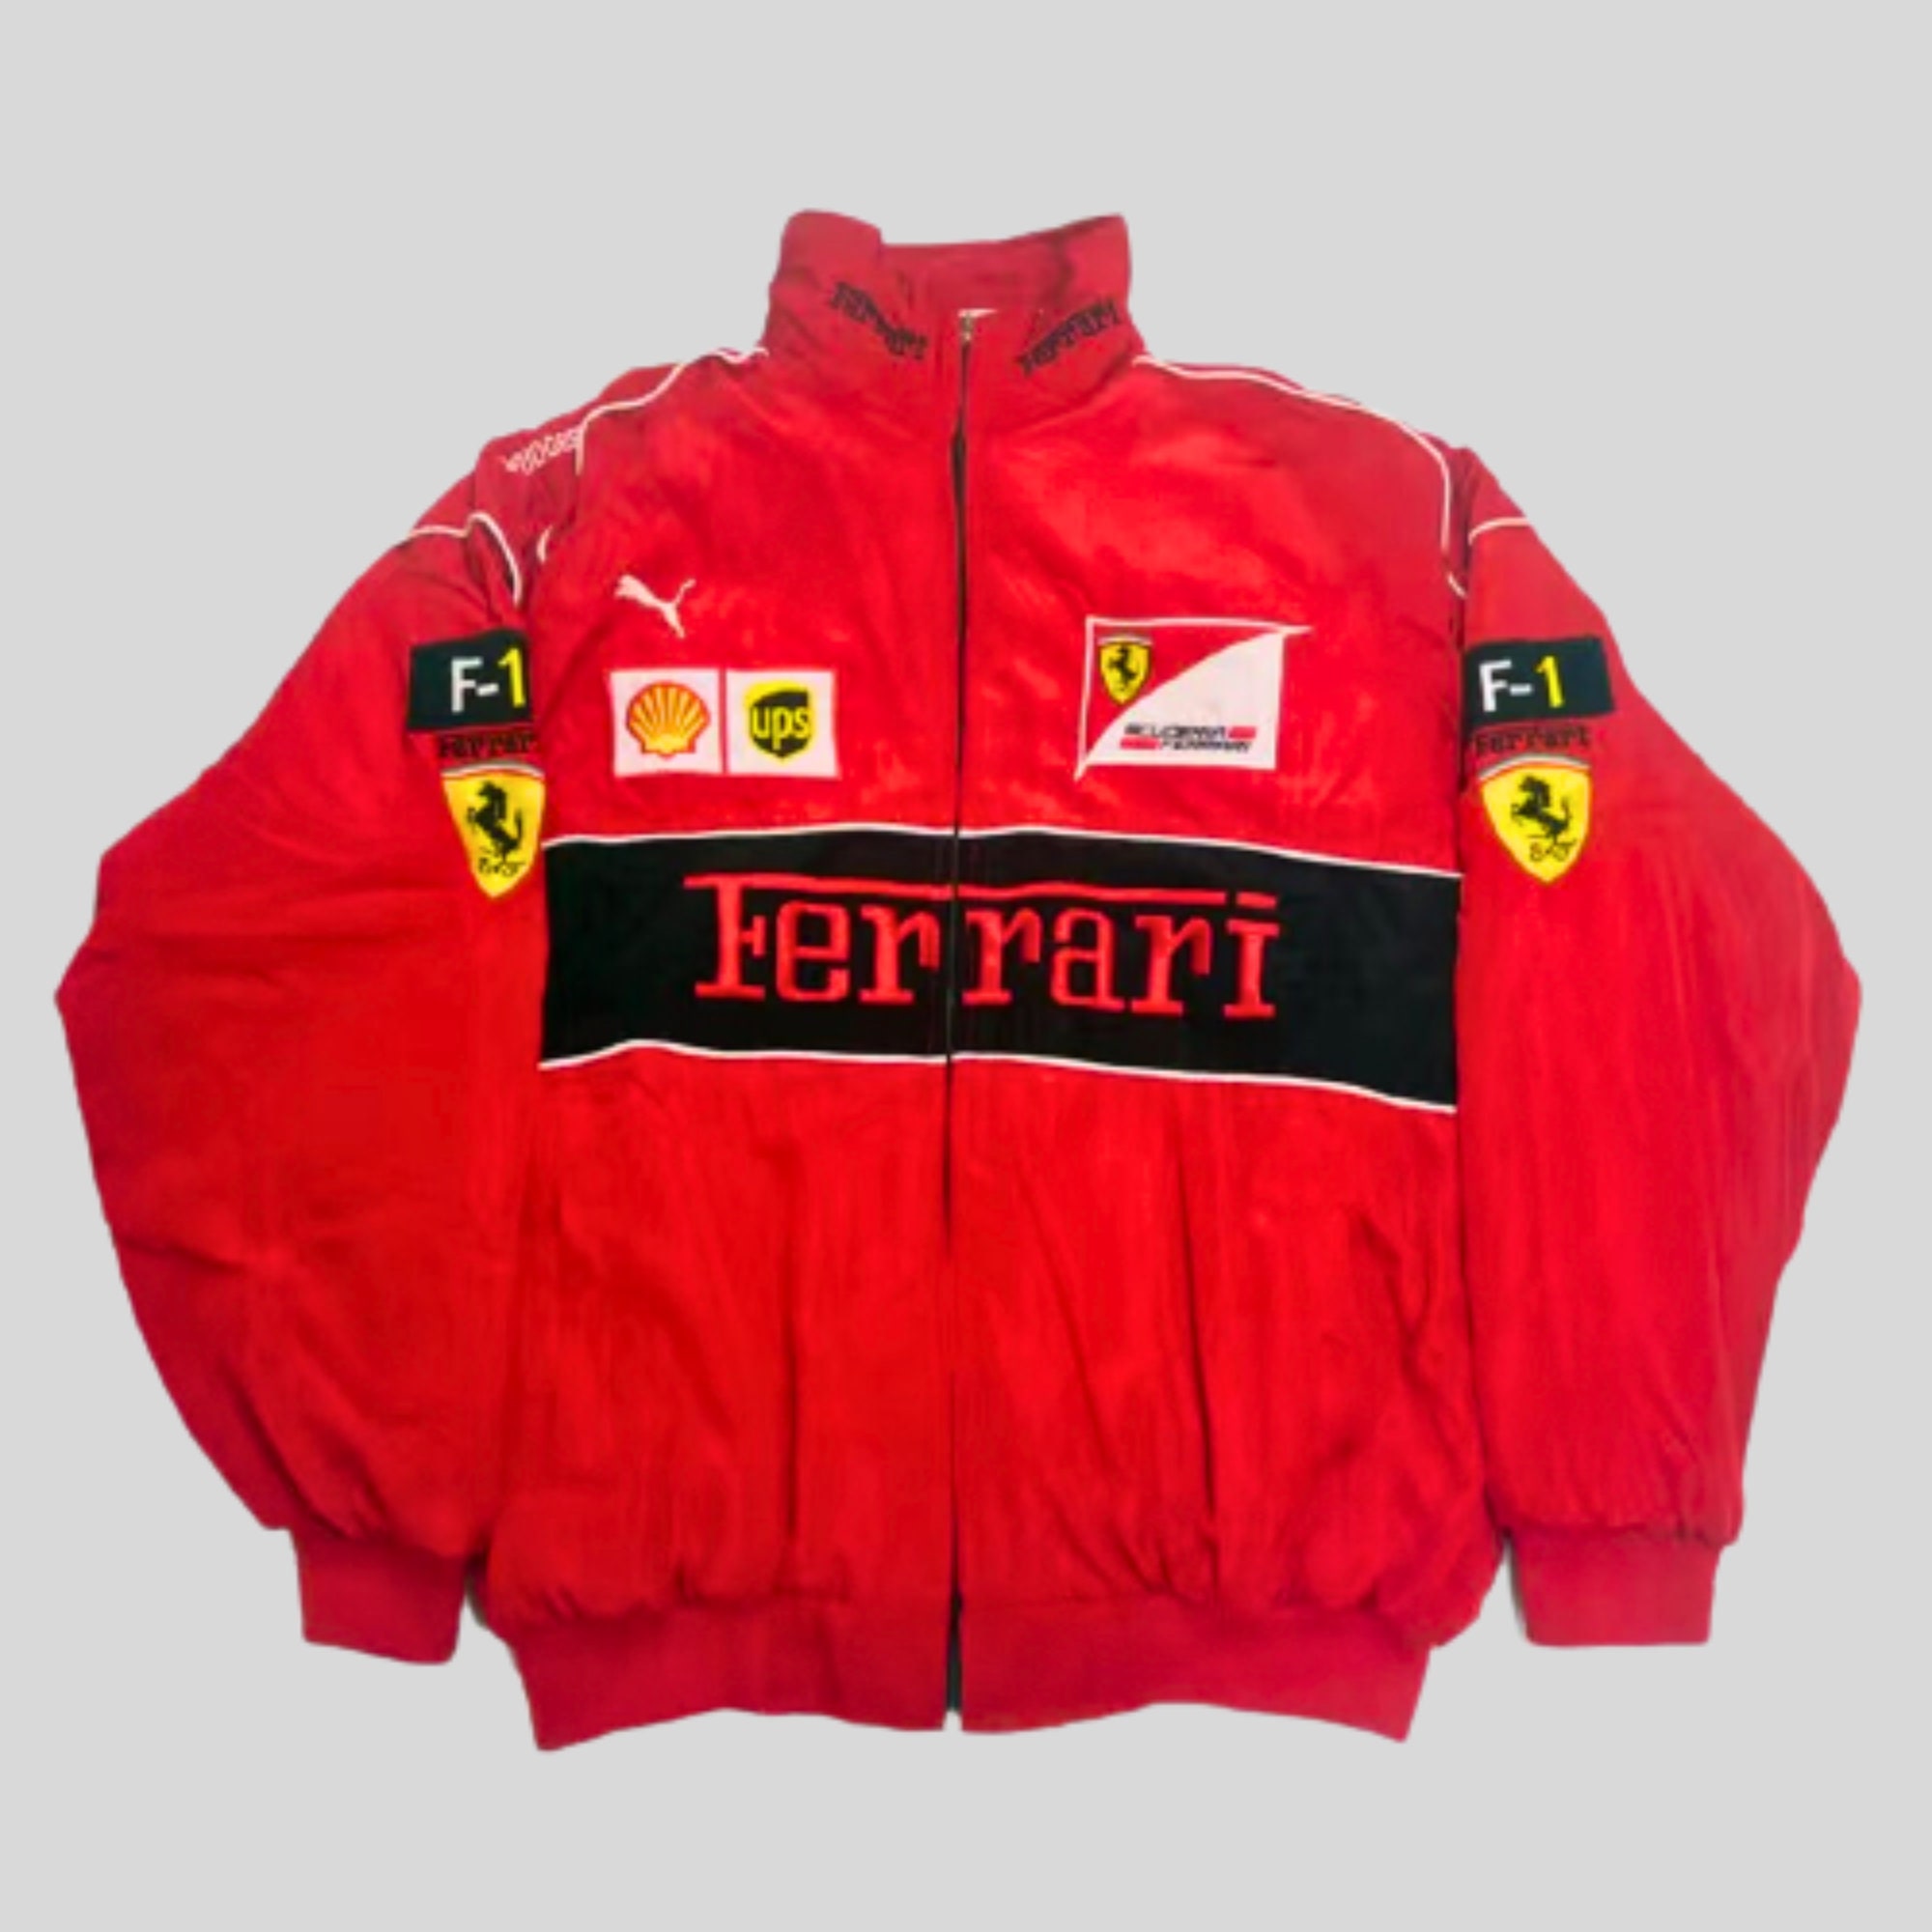 Ferrari Racing Jacket Red Vintage Nascar Bomber F1 Jacket - Etsy